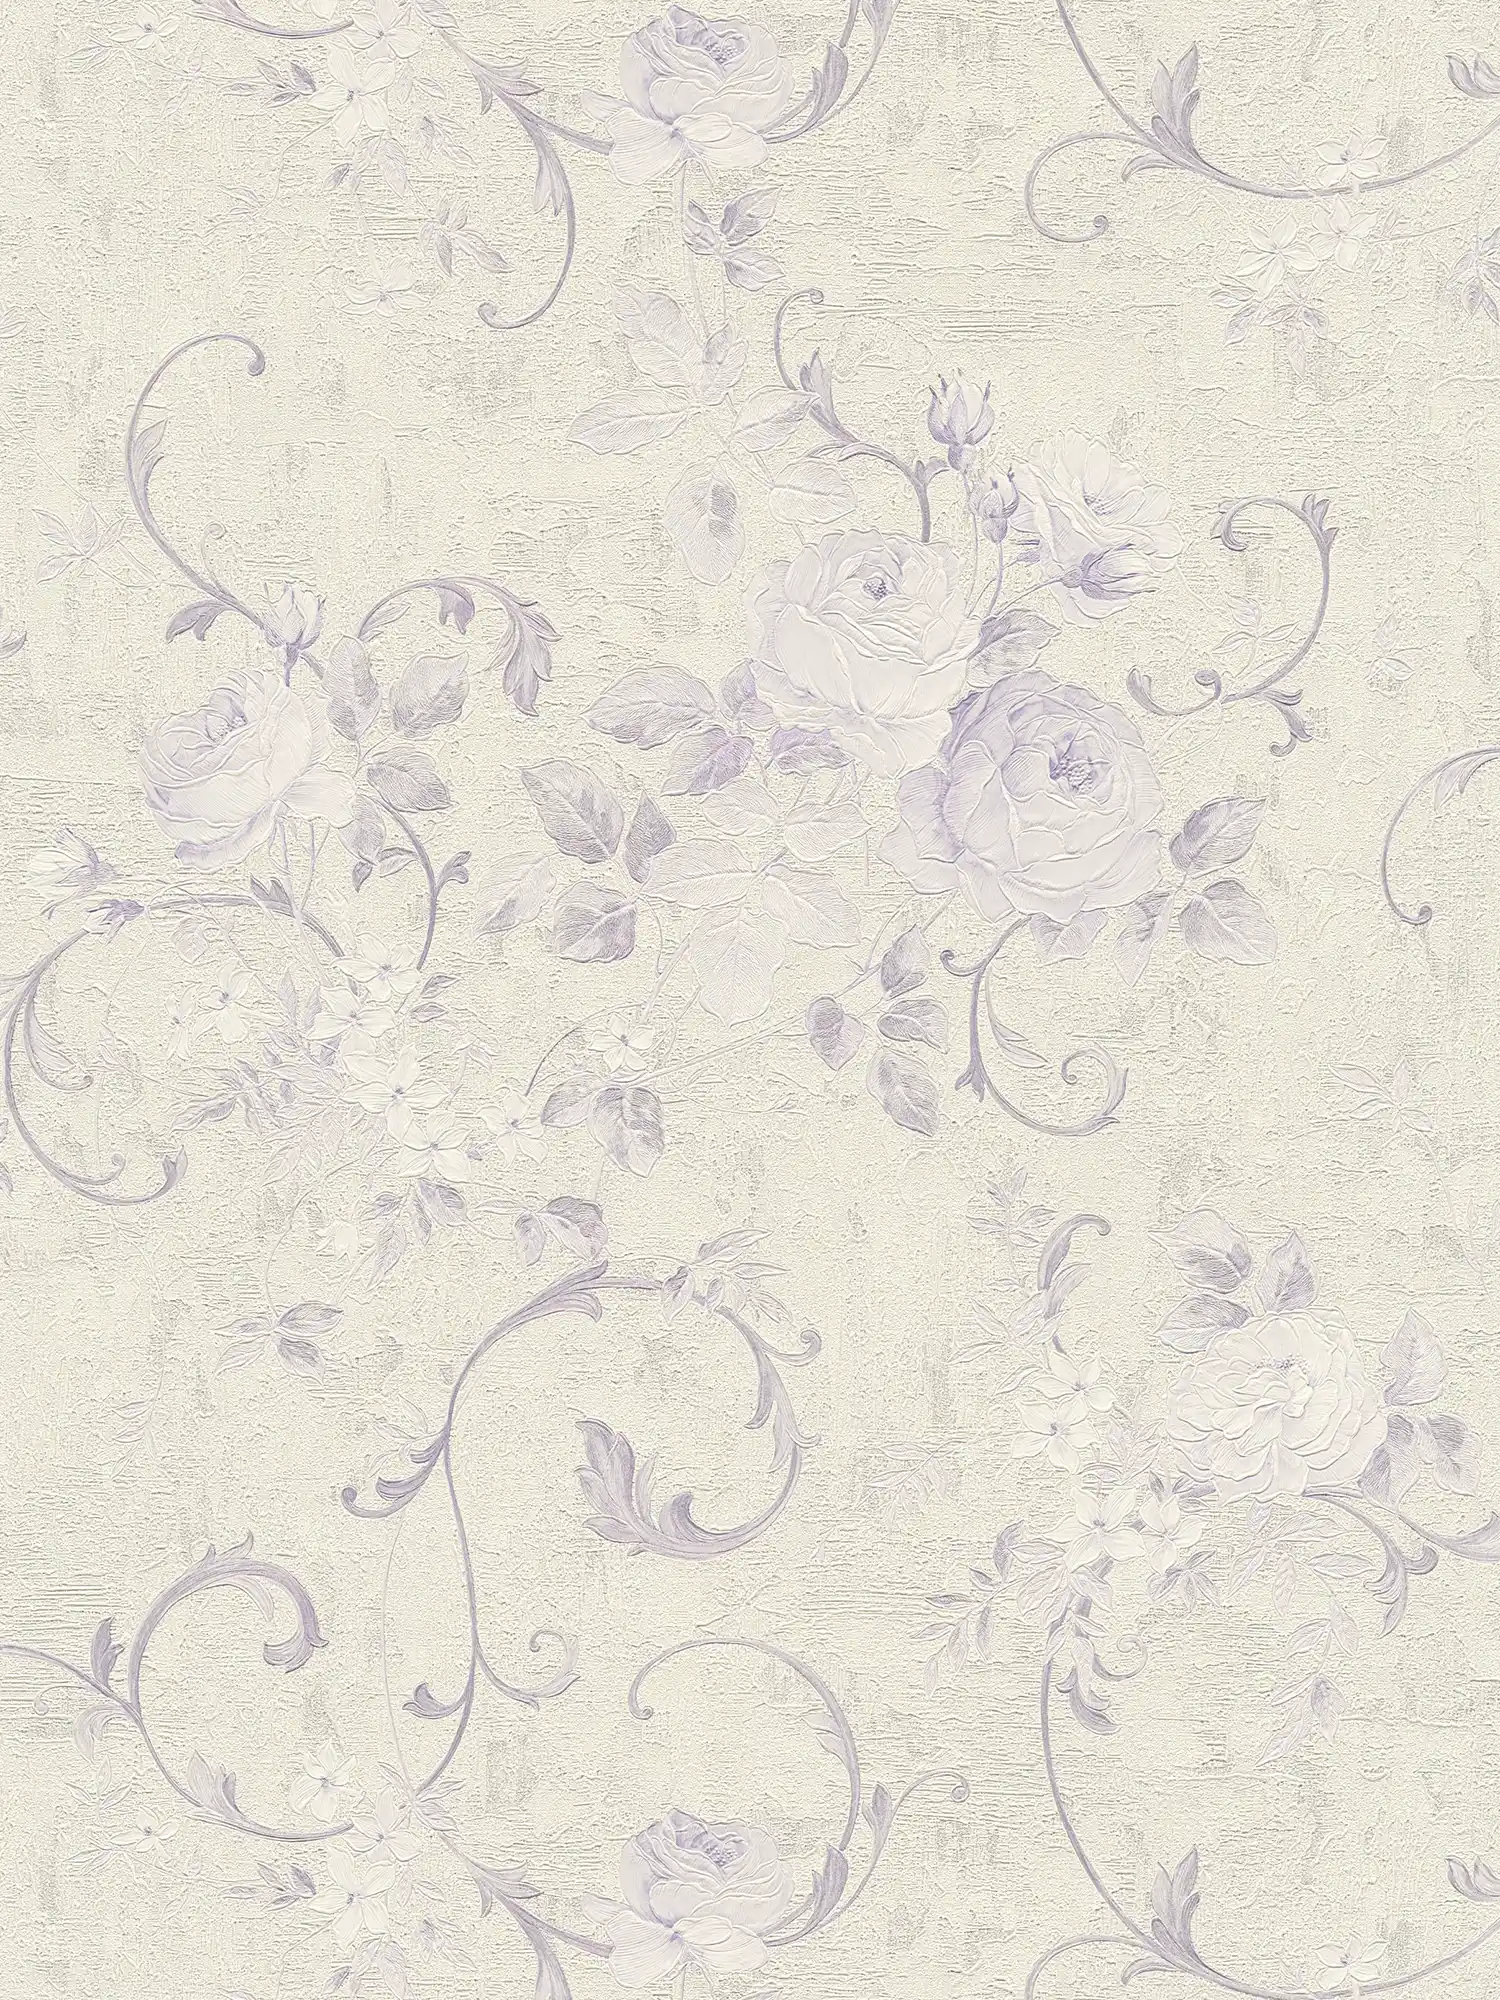 Wallpaper rose pattern & leaf tendrils - cream, metallic, purple
